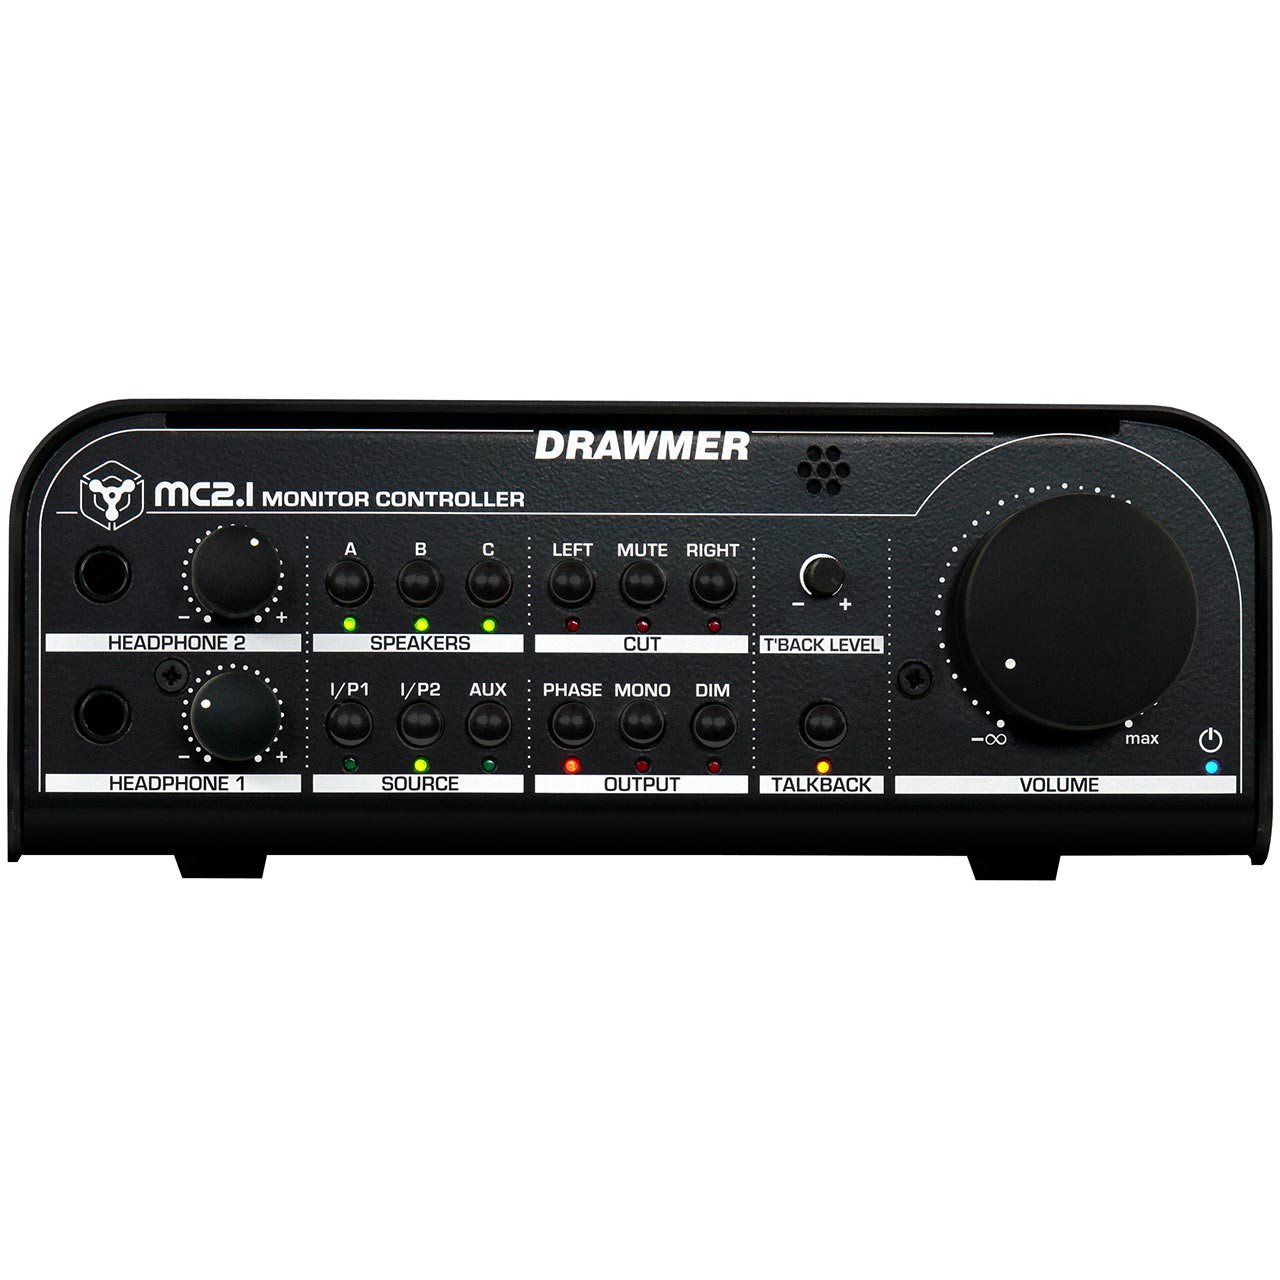 Monitor Controllers - Drawmer MC2.1 Monitor Controller